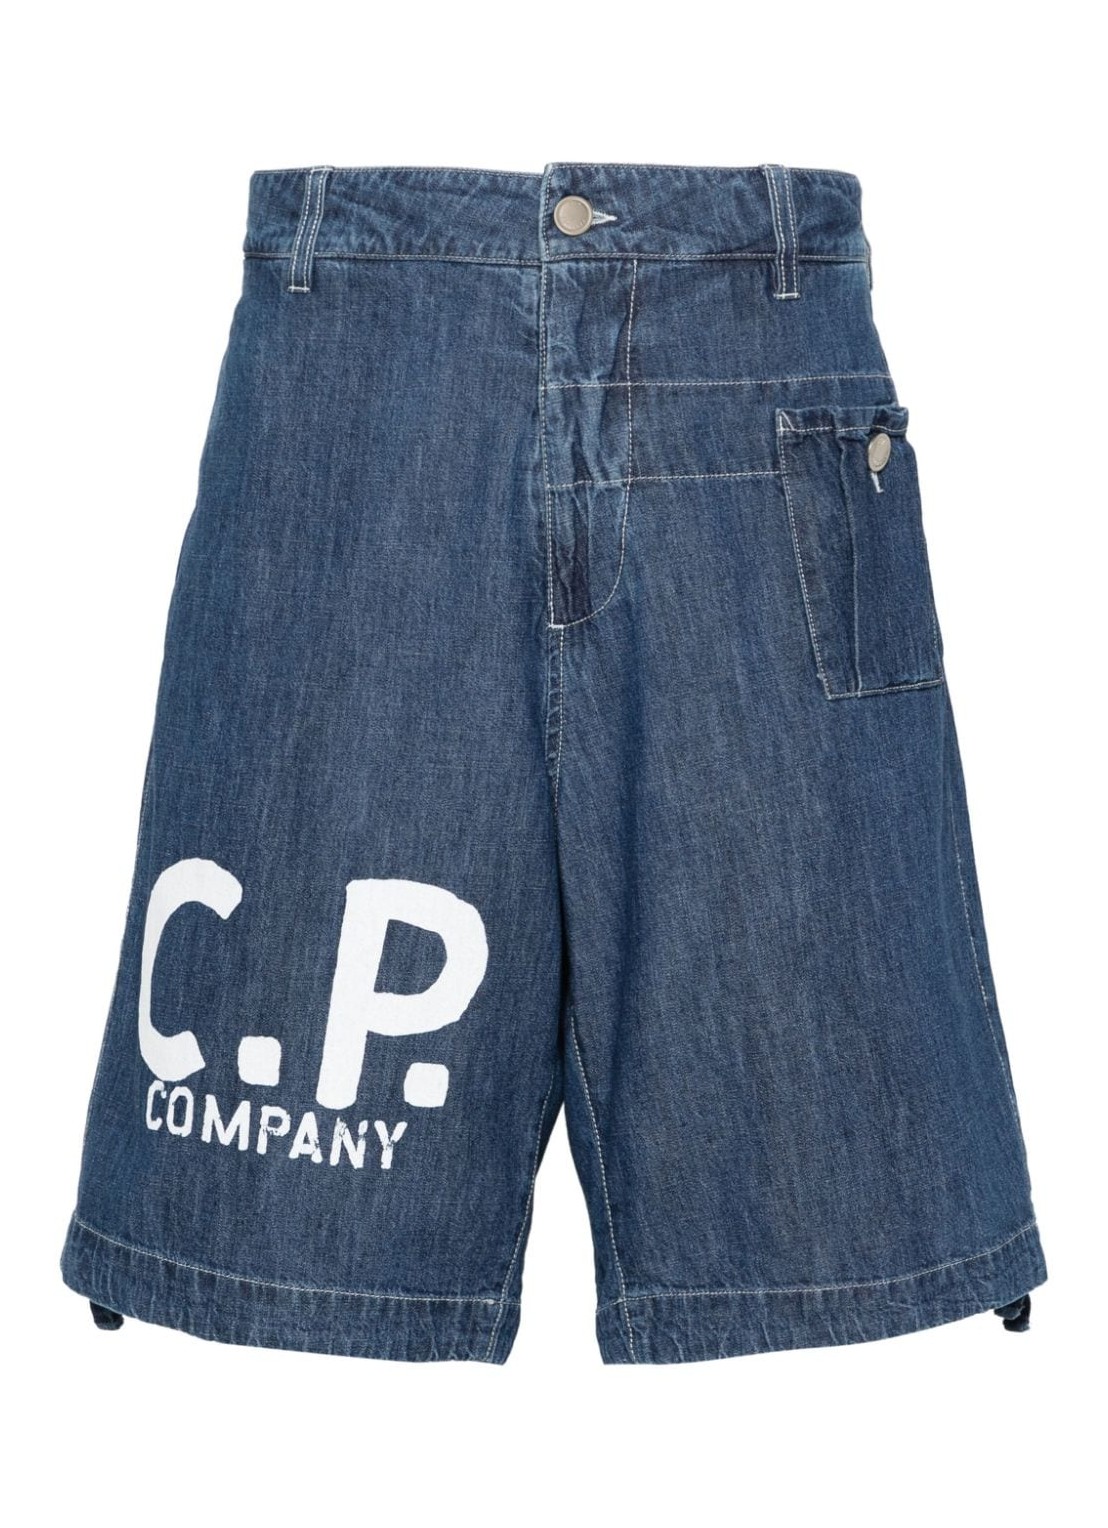 Pantalon corto c.p.company short pant manblu utility shorts - 16cmbe136a006524w d11 talla Azul
 